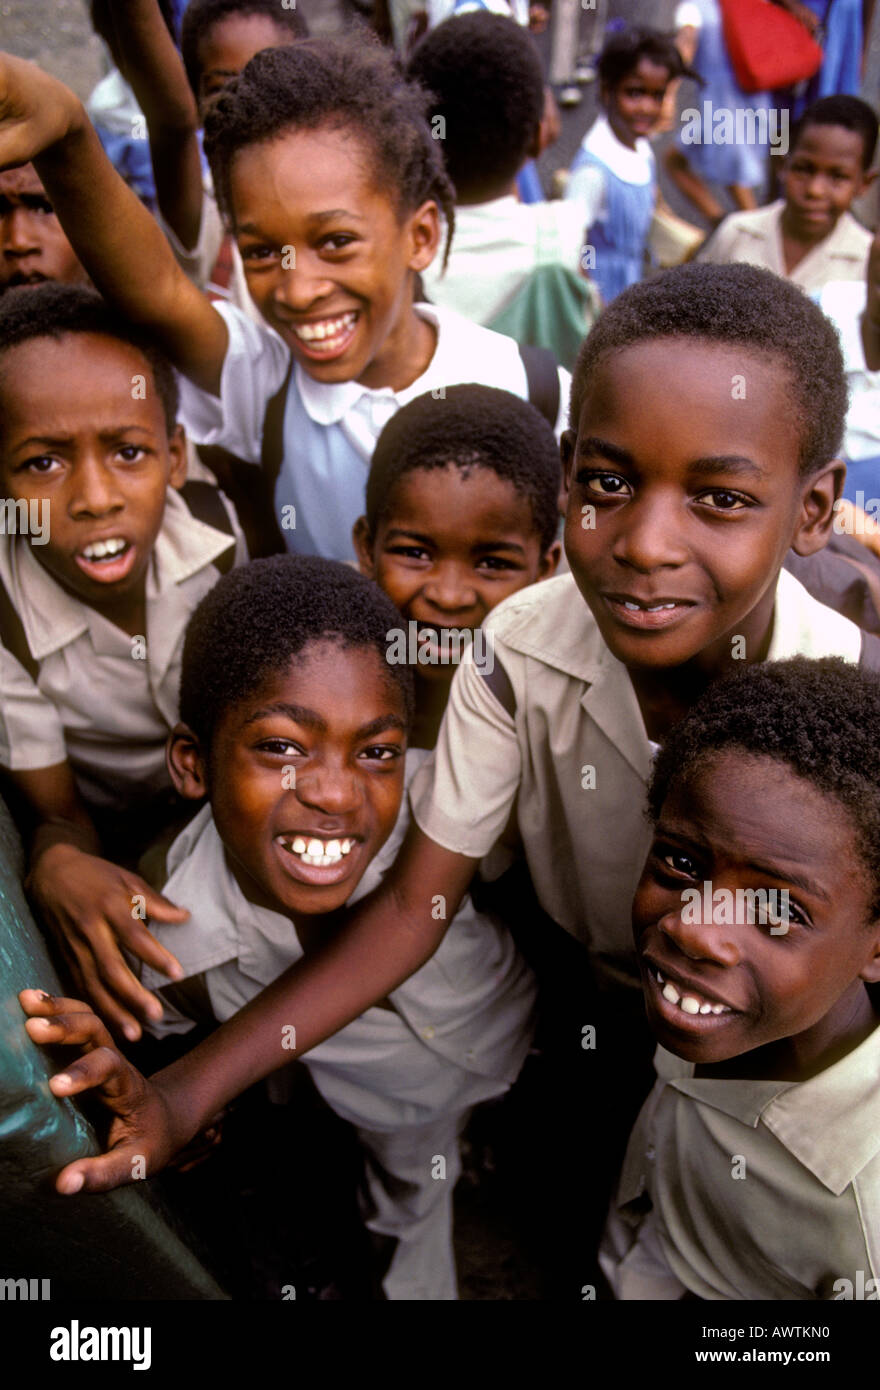 Jamaican girls, Jamaican boys, schoolgirls, schoolboys, schoolchildren, students, elementary school, Spanish Town, Jamaica, Caribbean, West Indies Stock Photo